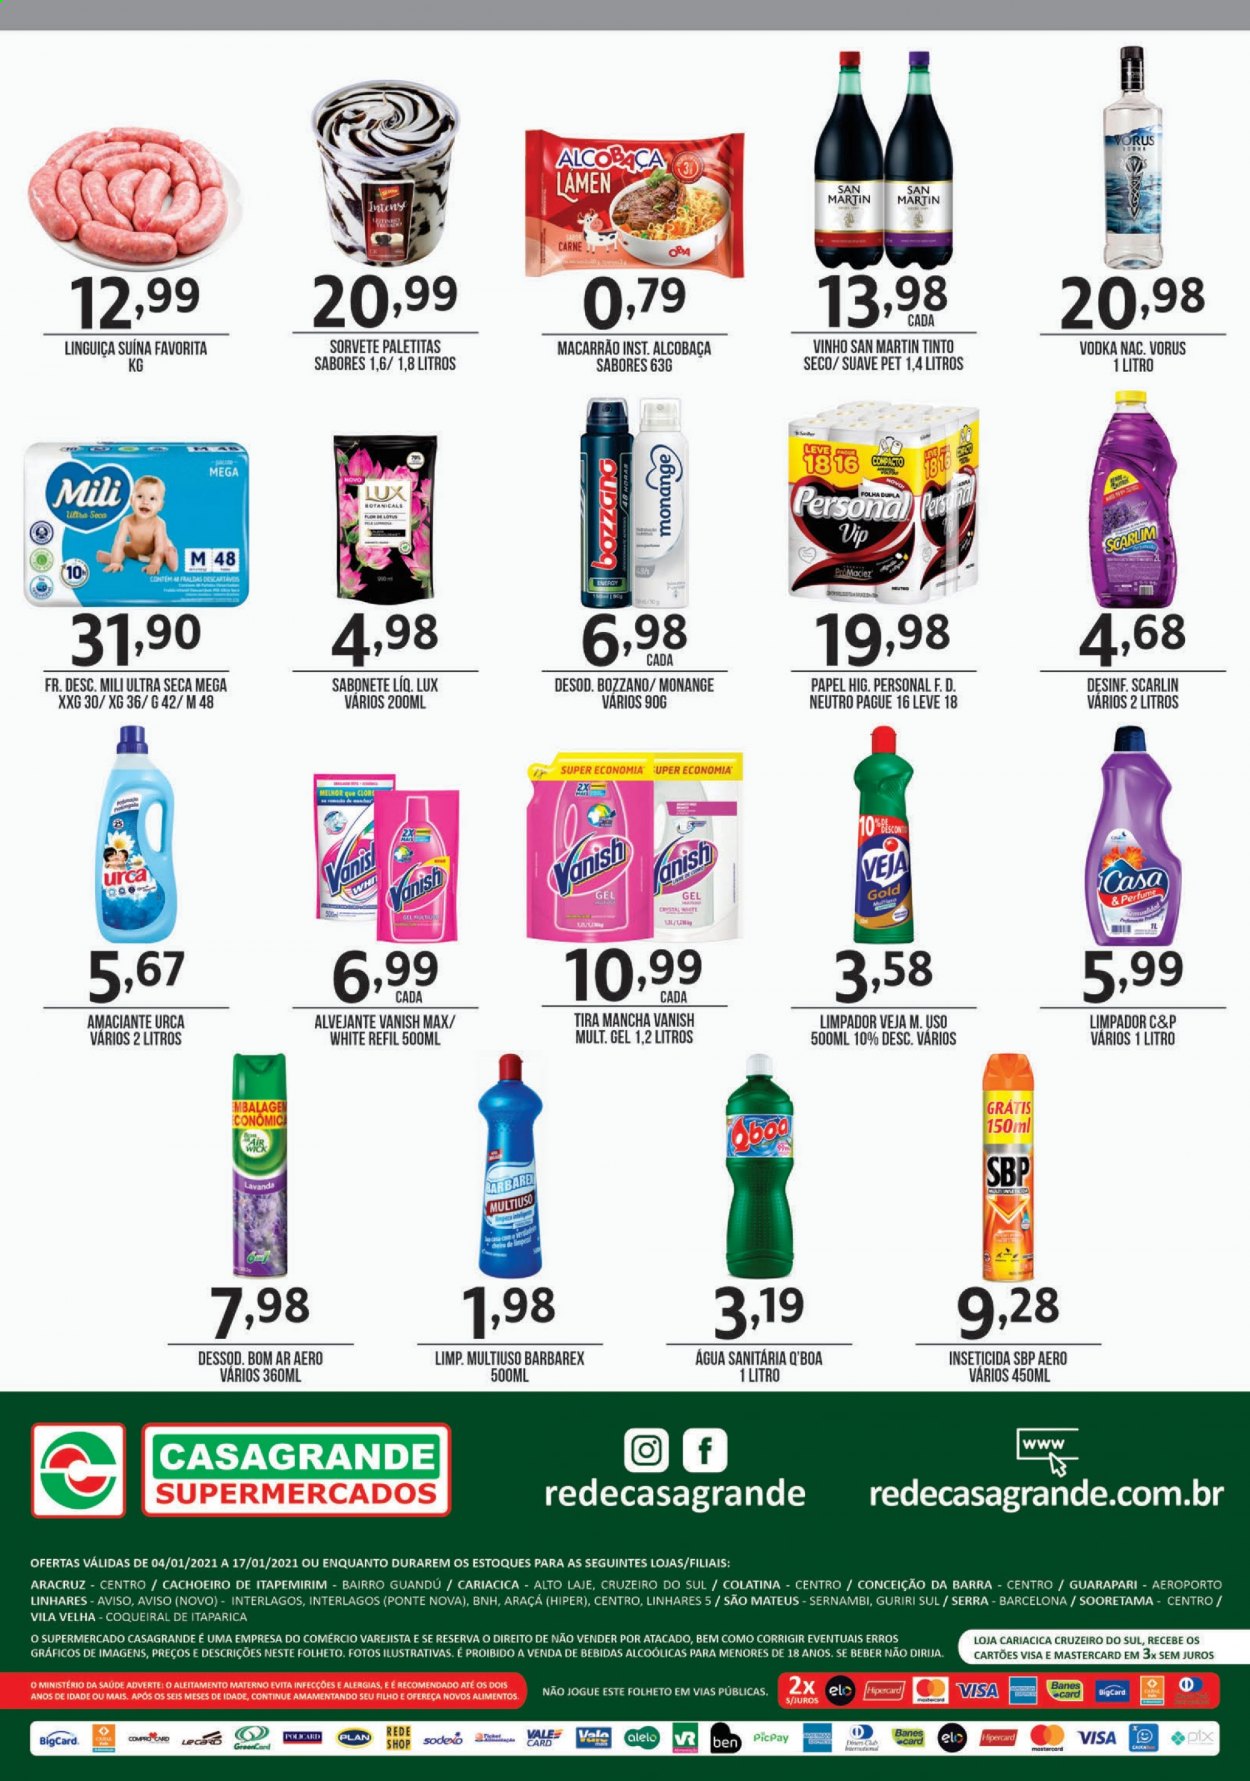 Encarte Casagrande Supermercados  - 04.01.2021 - 17.01.2021.